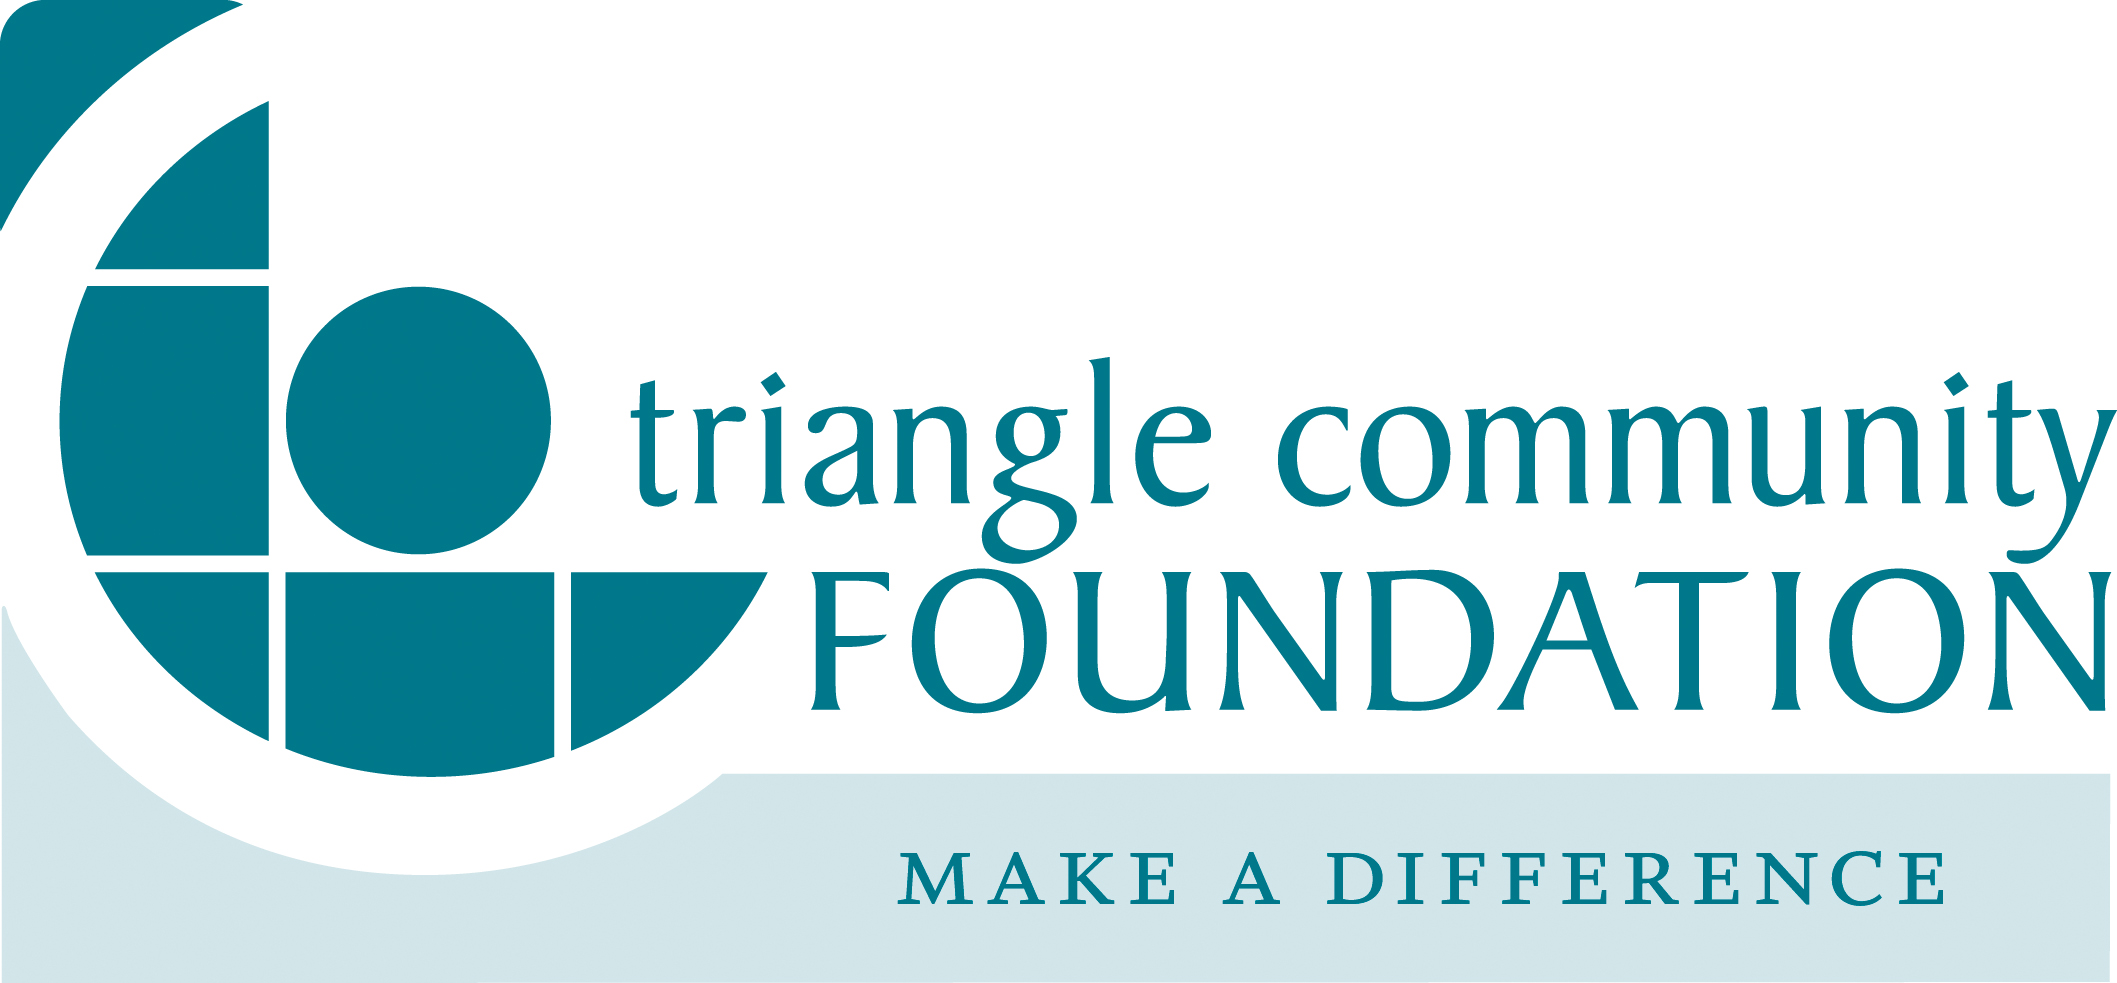 Triangle Community Foundation